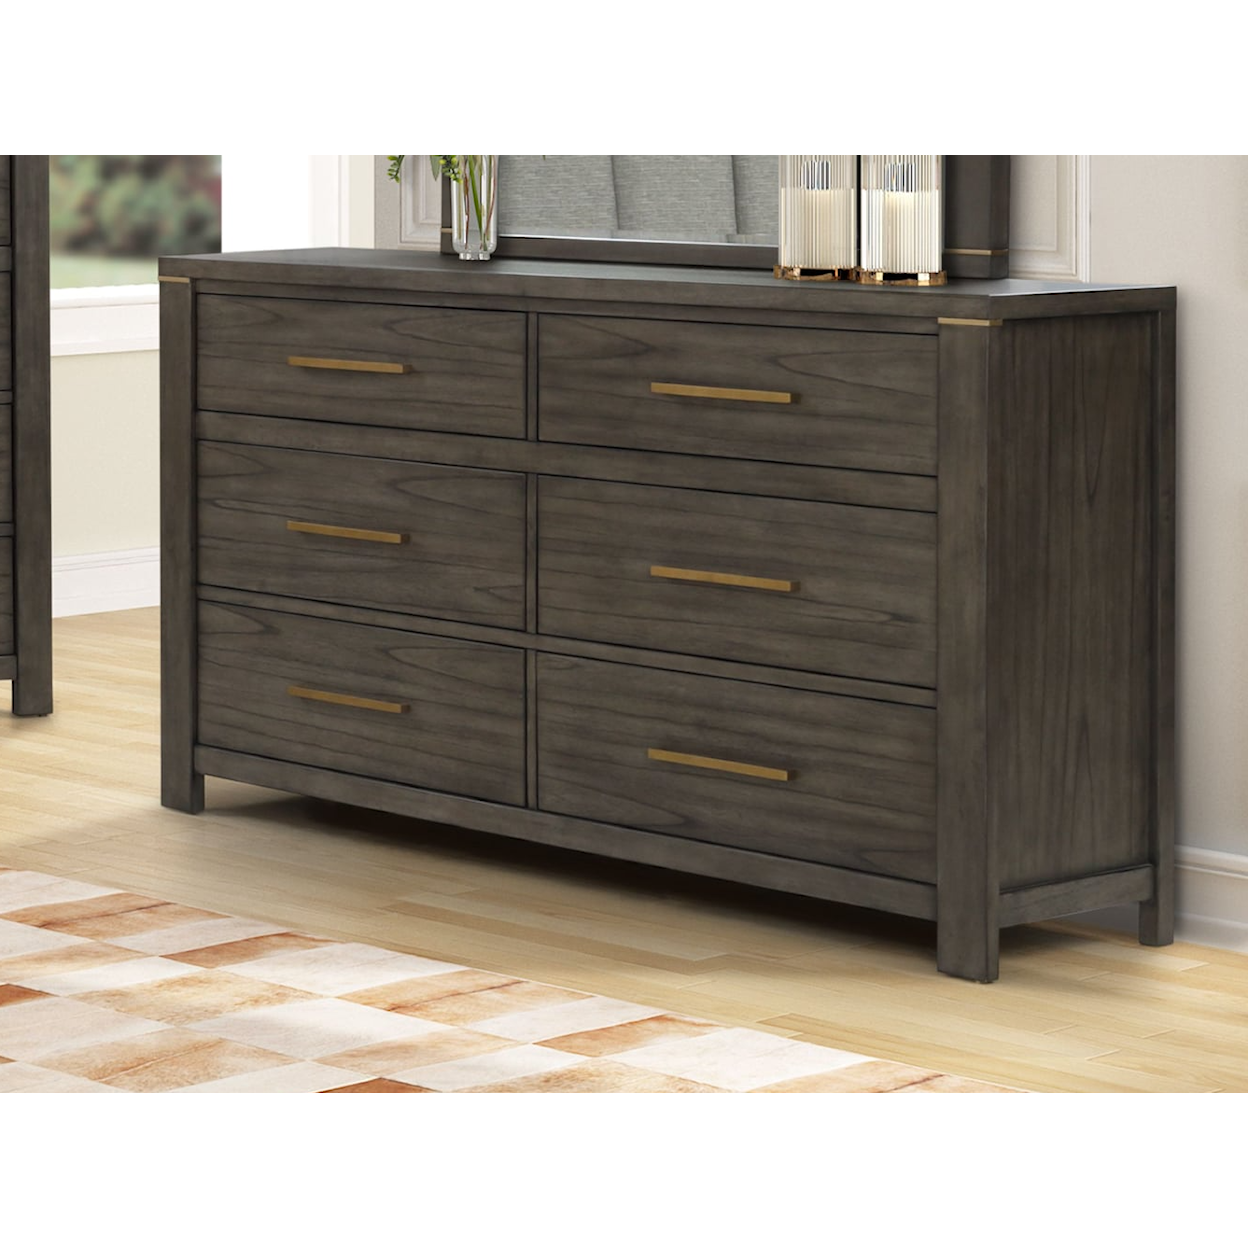 Alex's Furniture 8481A Dresser W/ Full Extension Drawer Glides